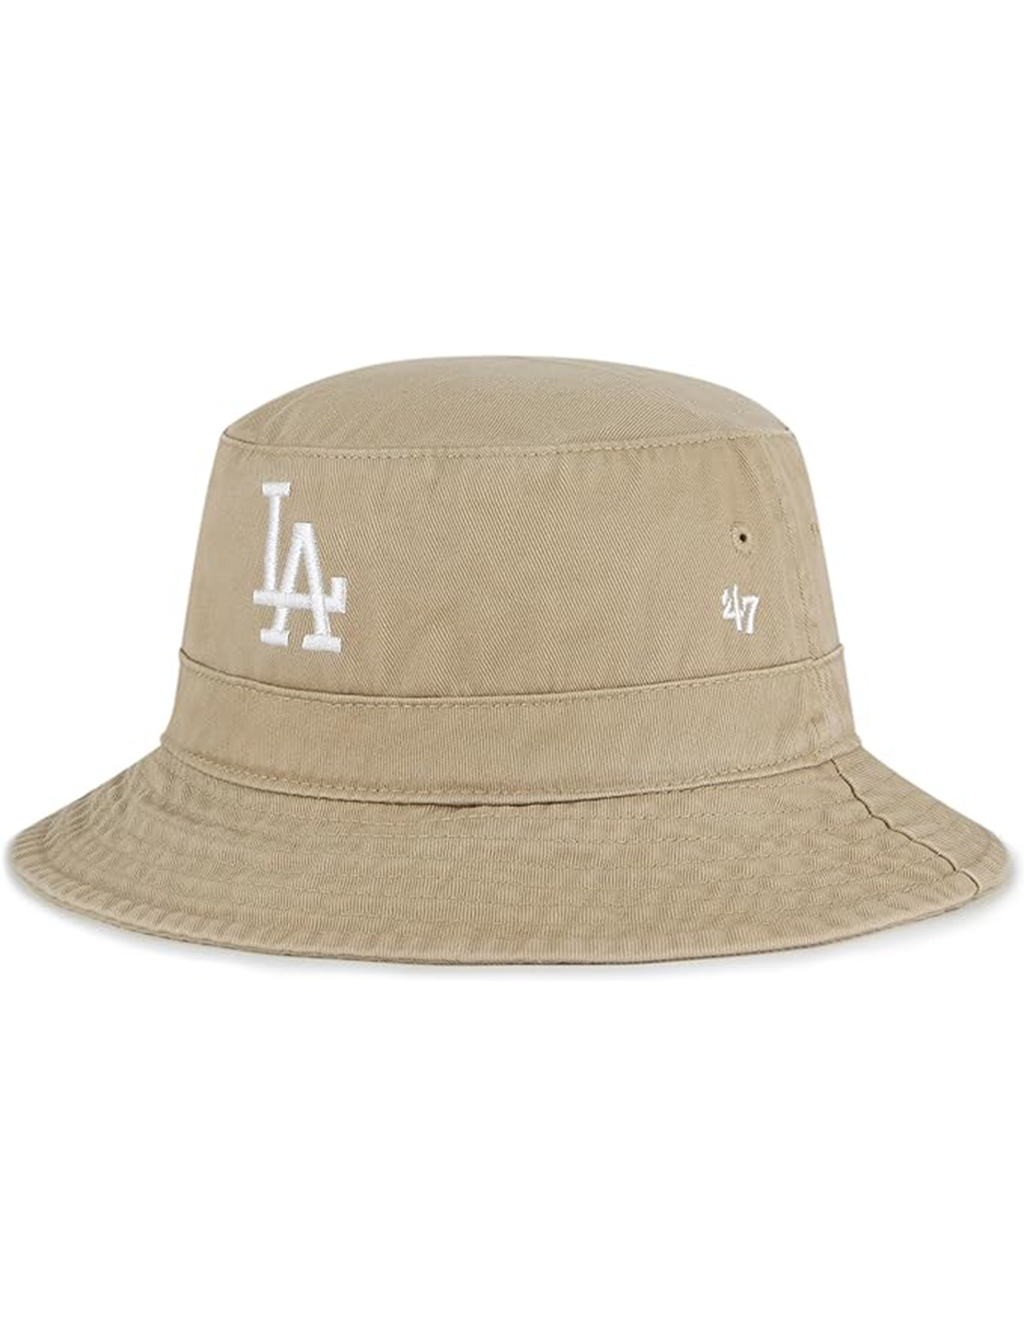 LA Dodgers Bucket Hat, Khaki/White